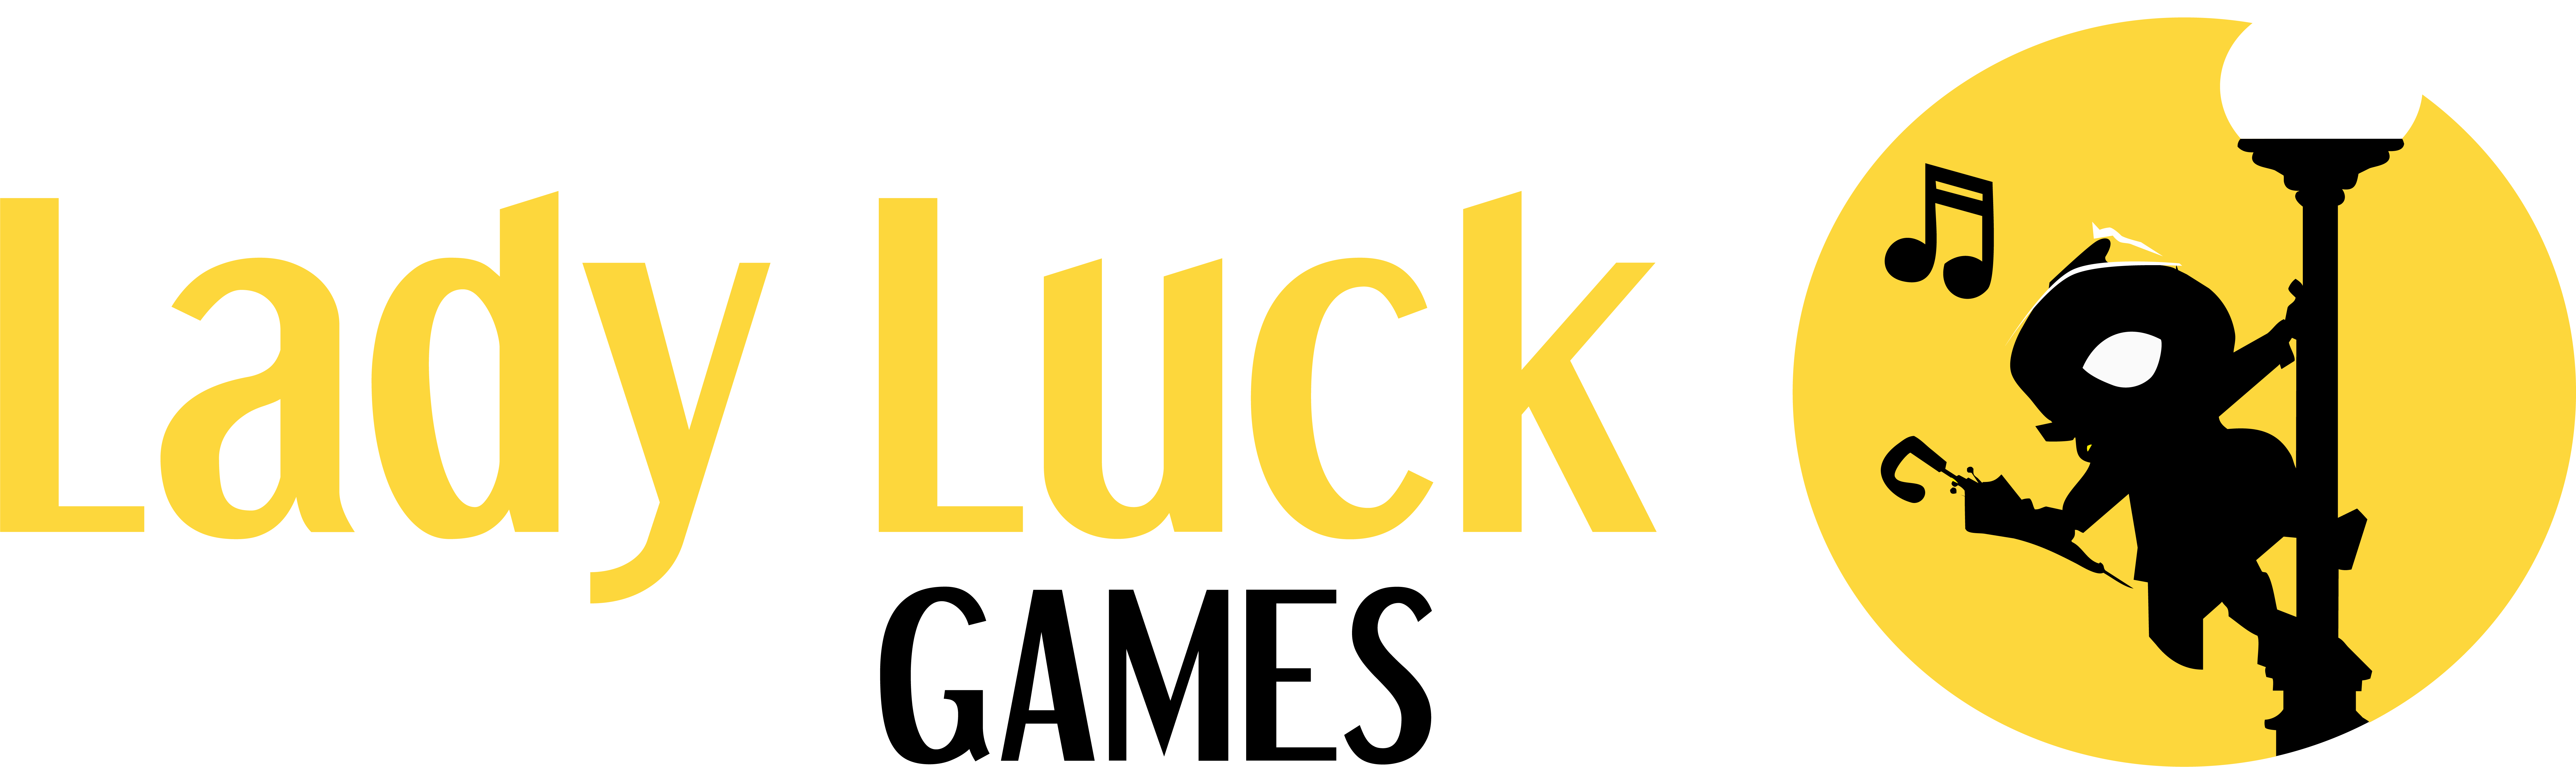 Lady Luck Games (ранее Spigo)